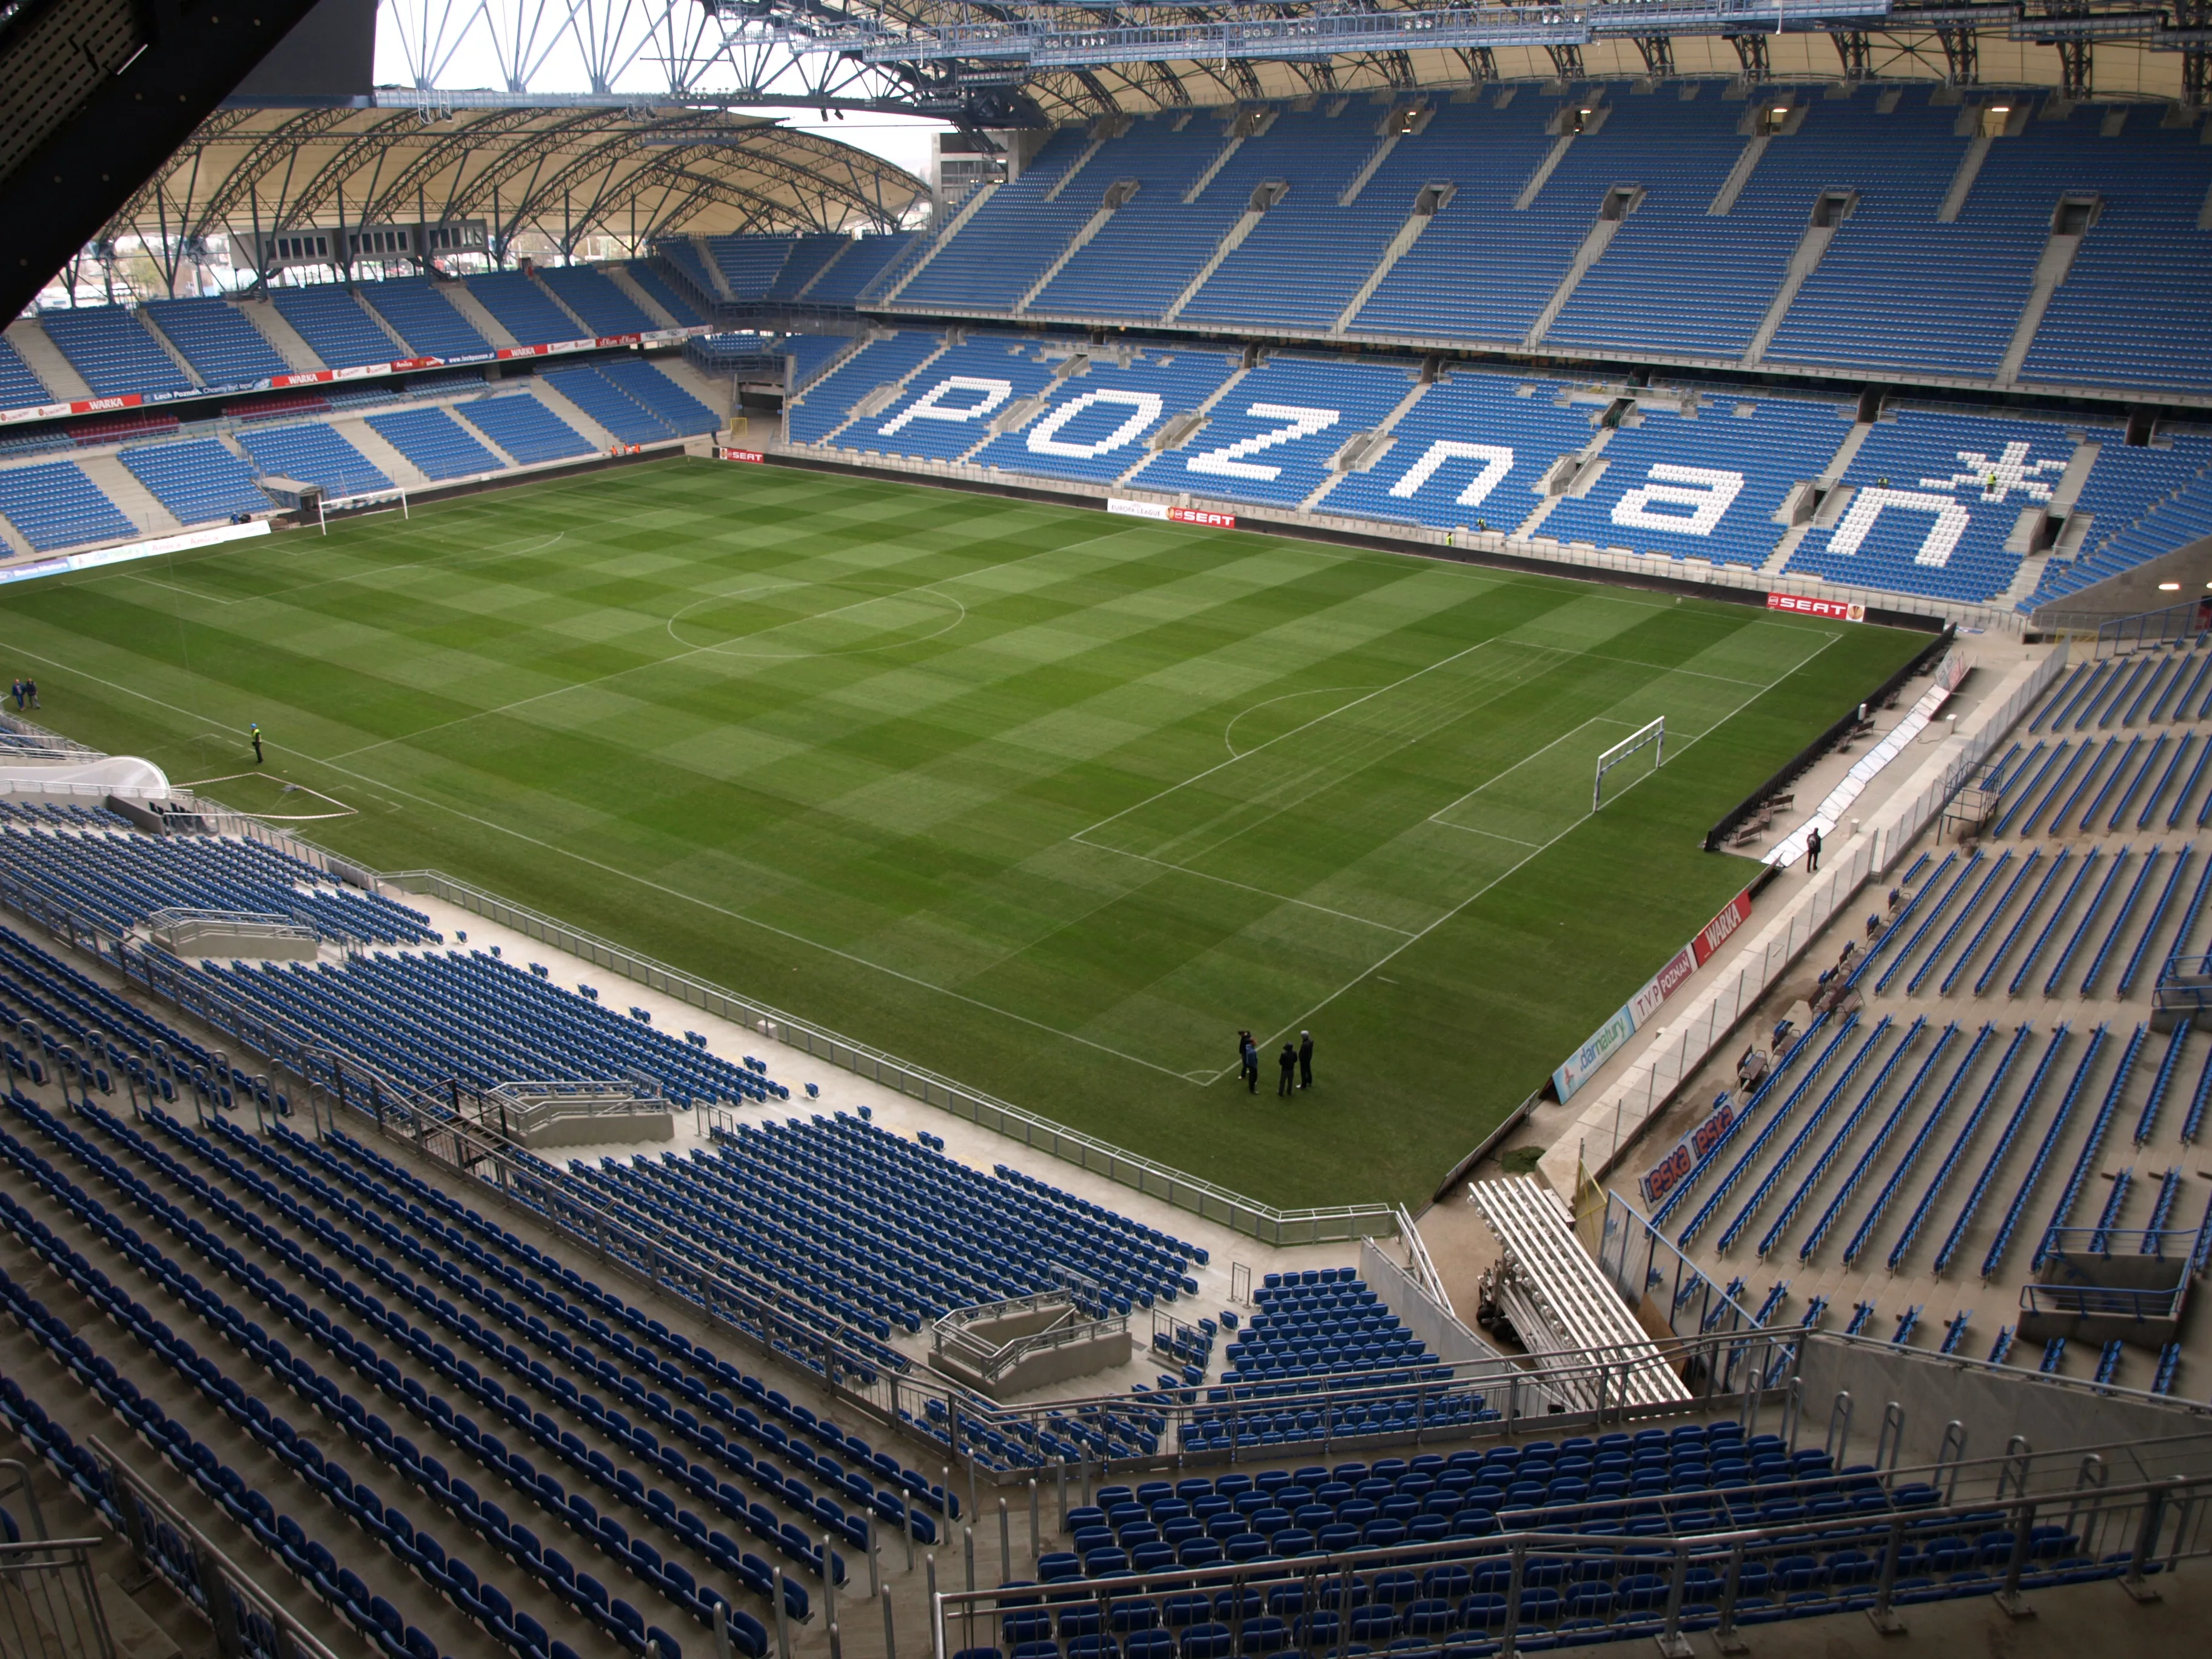 INEA Stadium in Poland, Europe | Football - Rated 4.2